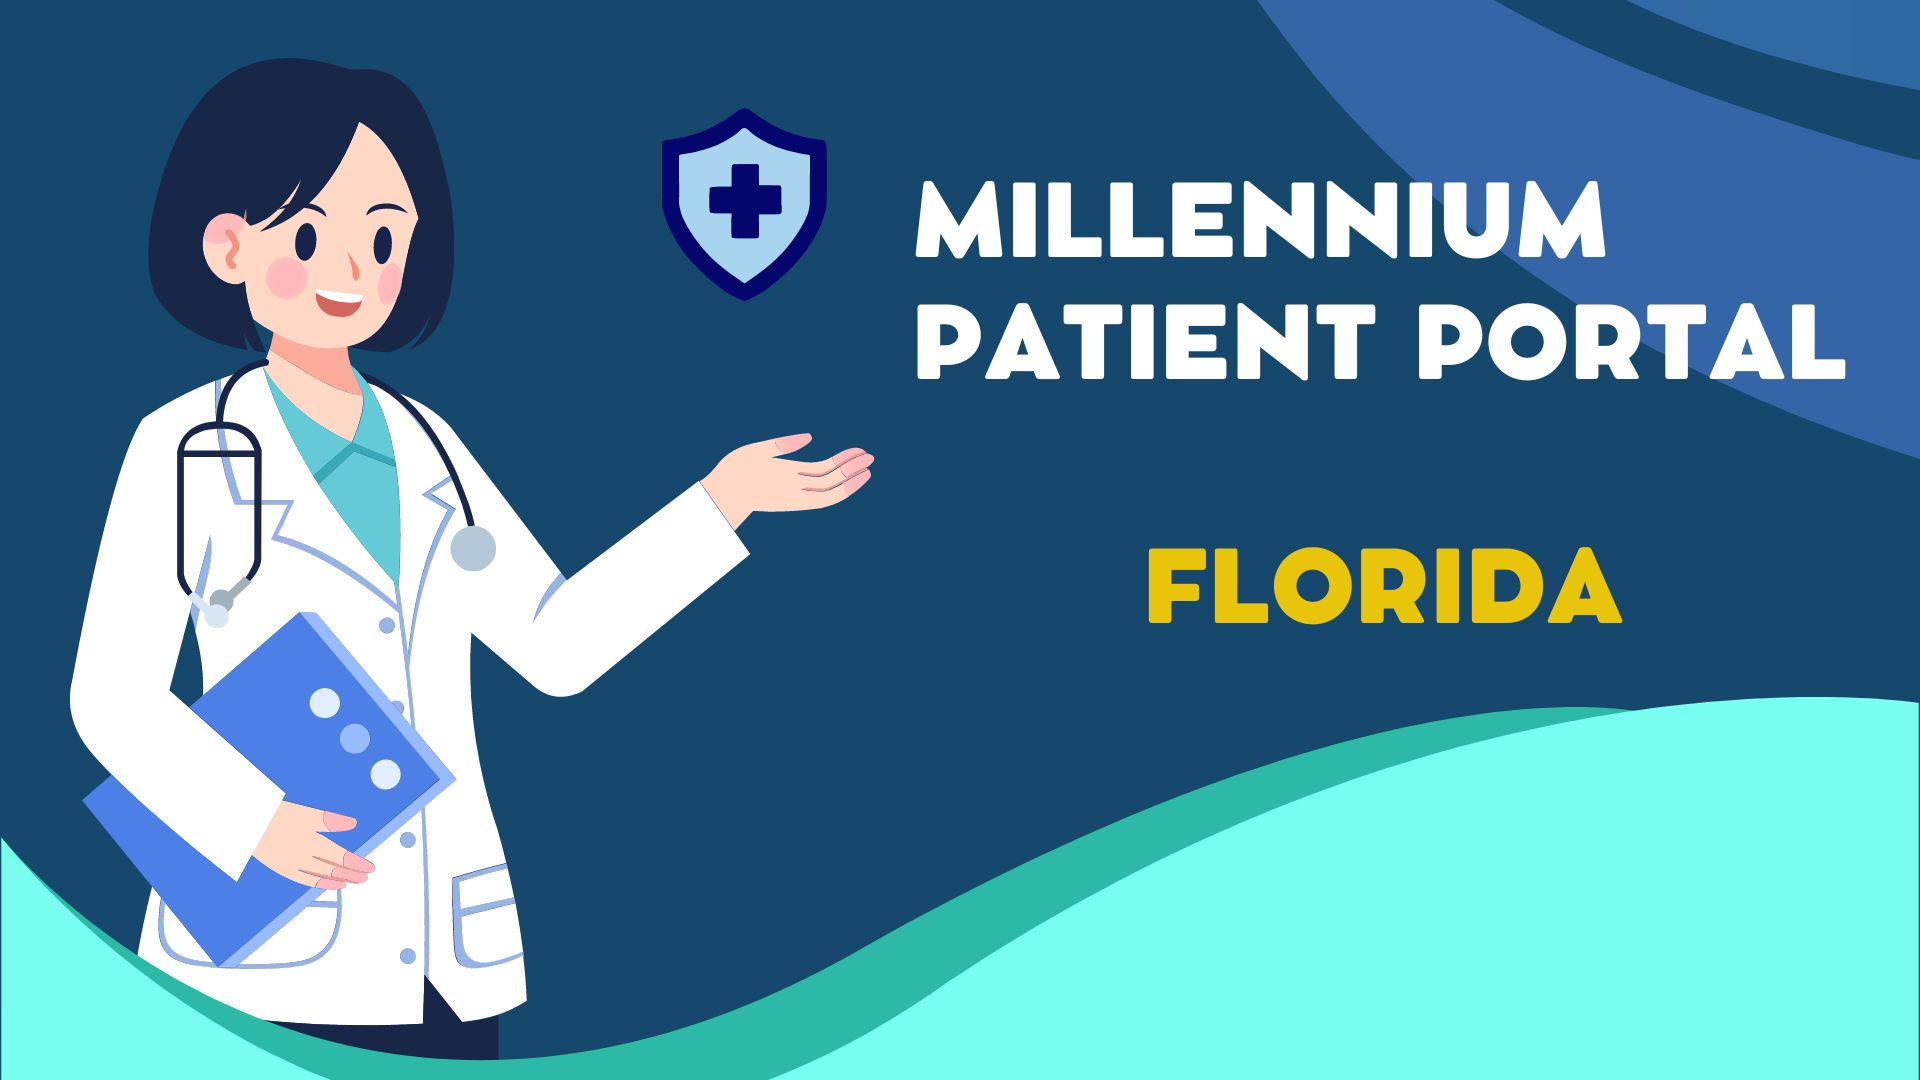 Millennium Patient Portal Florida